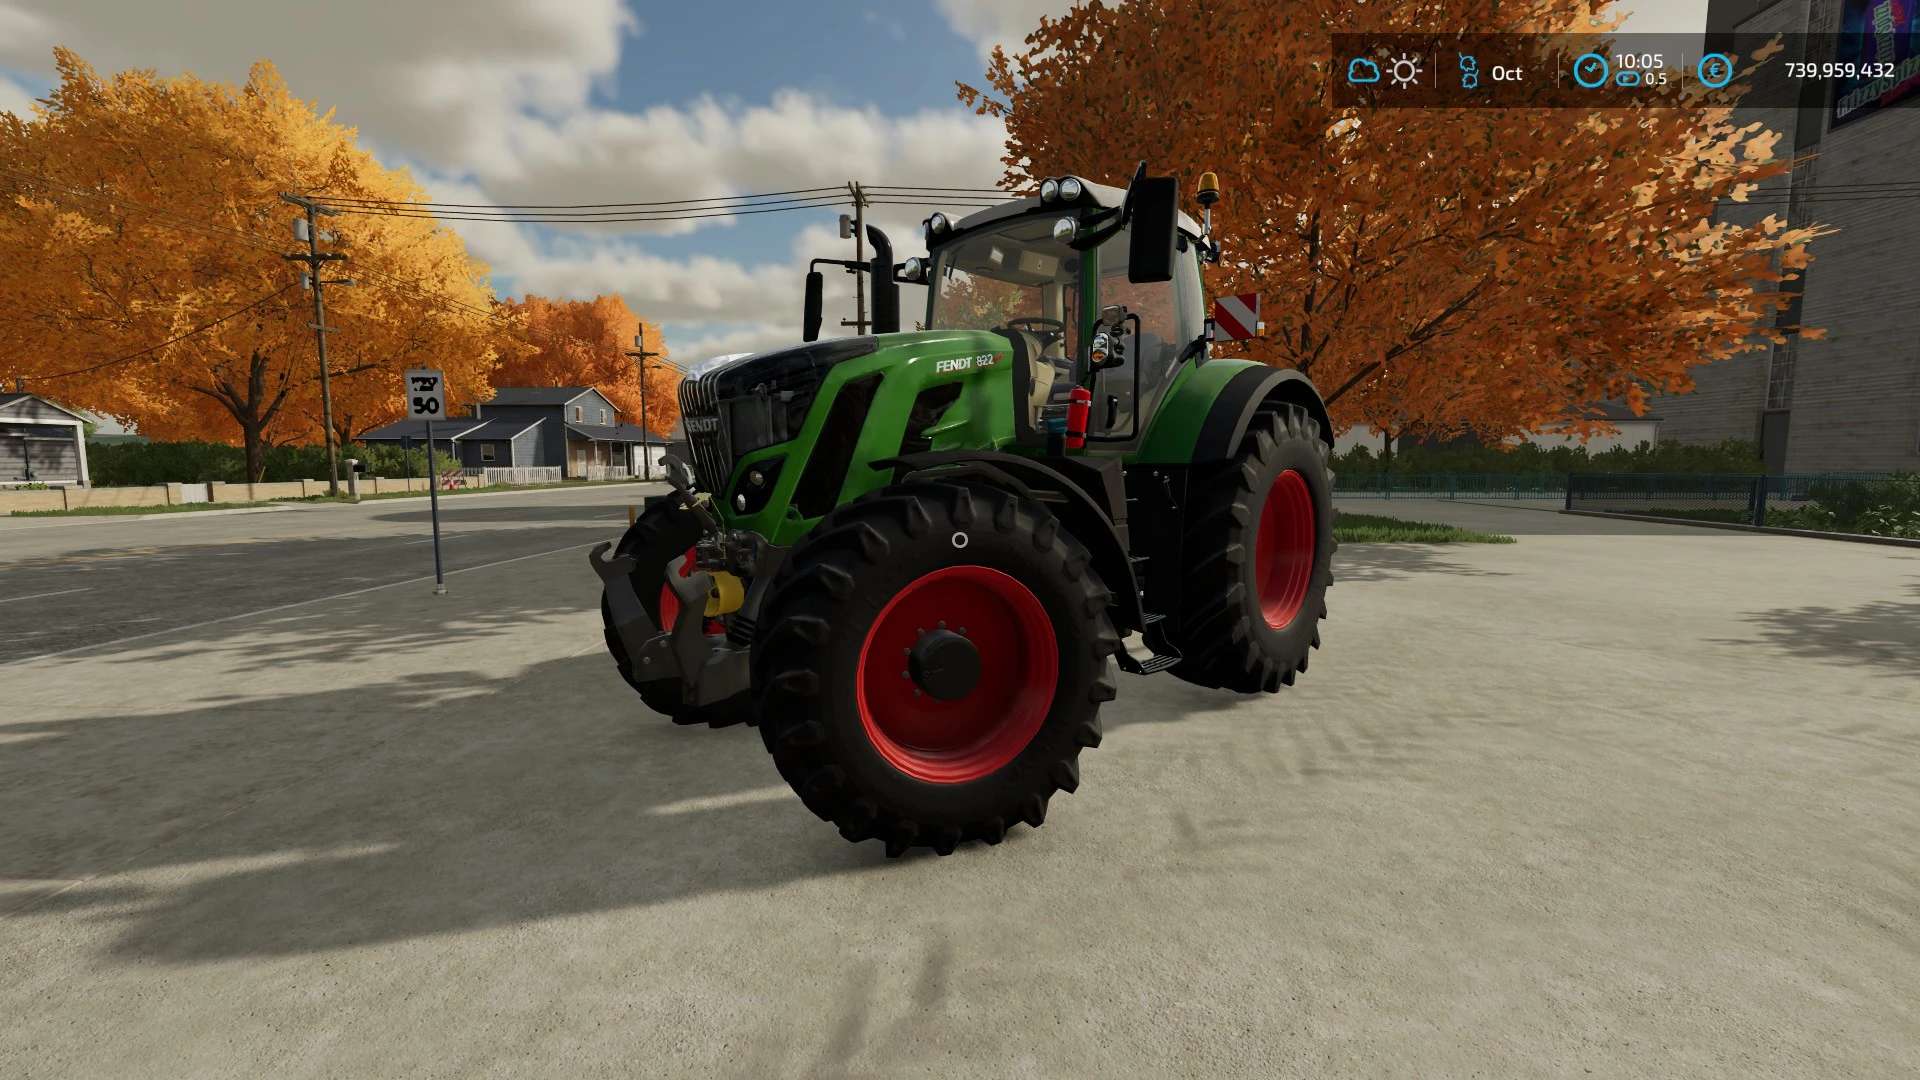 Fendt 800 S4 V10 Fs22 Farming Simulator 22 Mod Fs22 Mod 8020